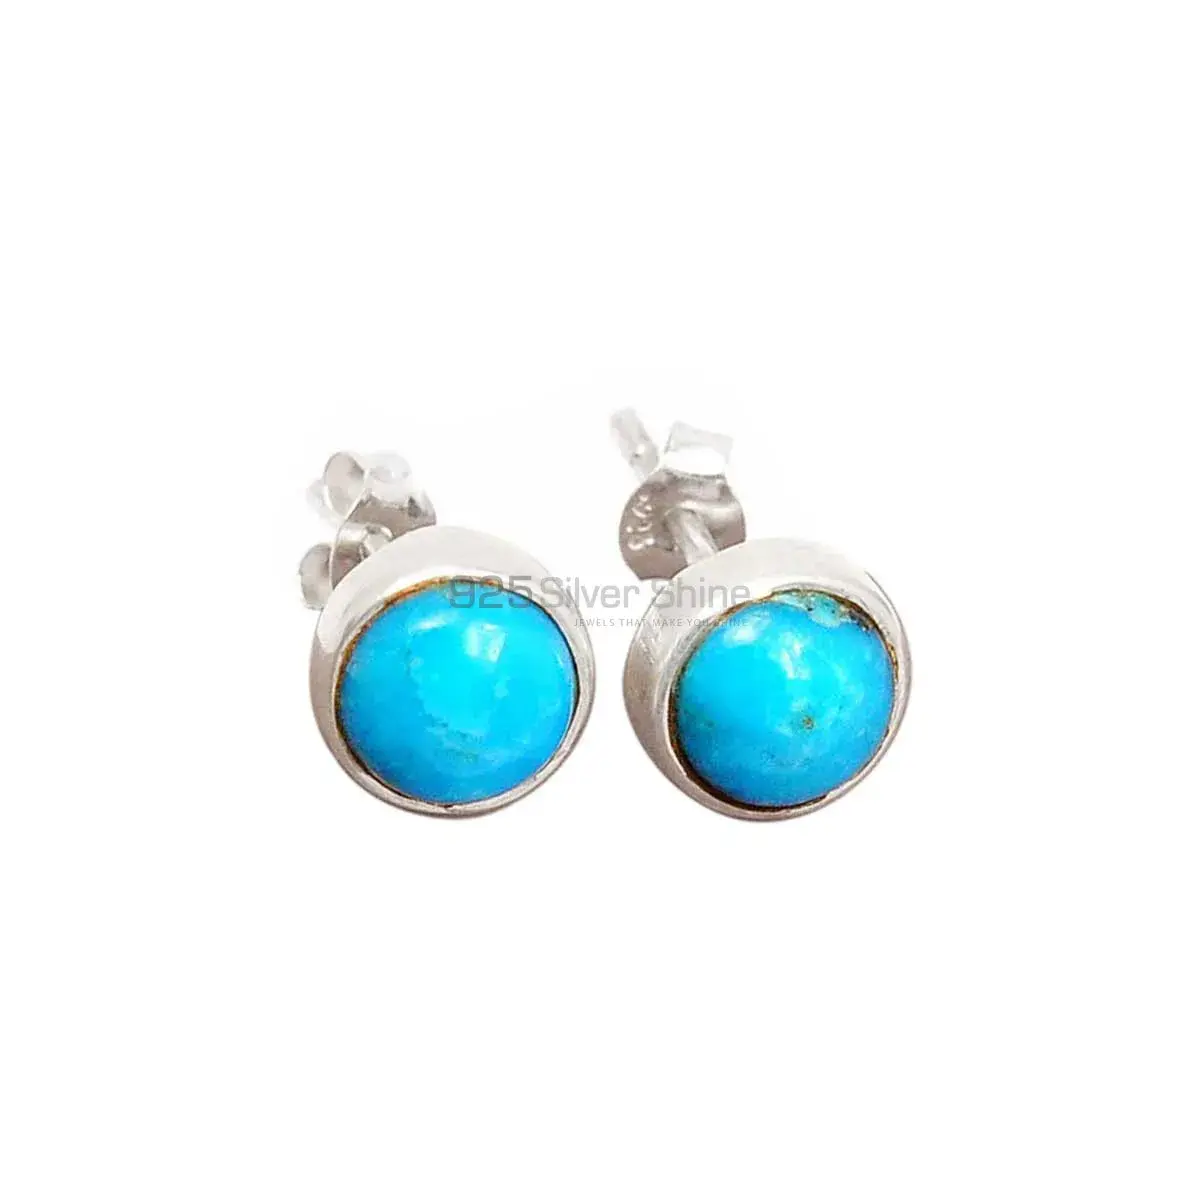 High Quality 925 Sterling Silver Handmade Earrings In Blue Agate Gemstone Jewelry 925SE2689